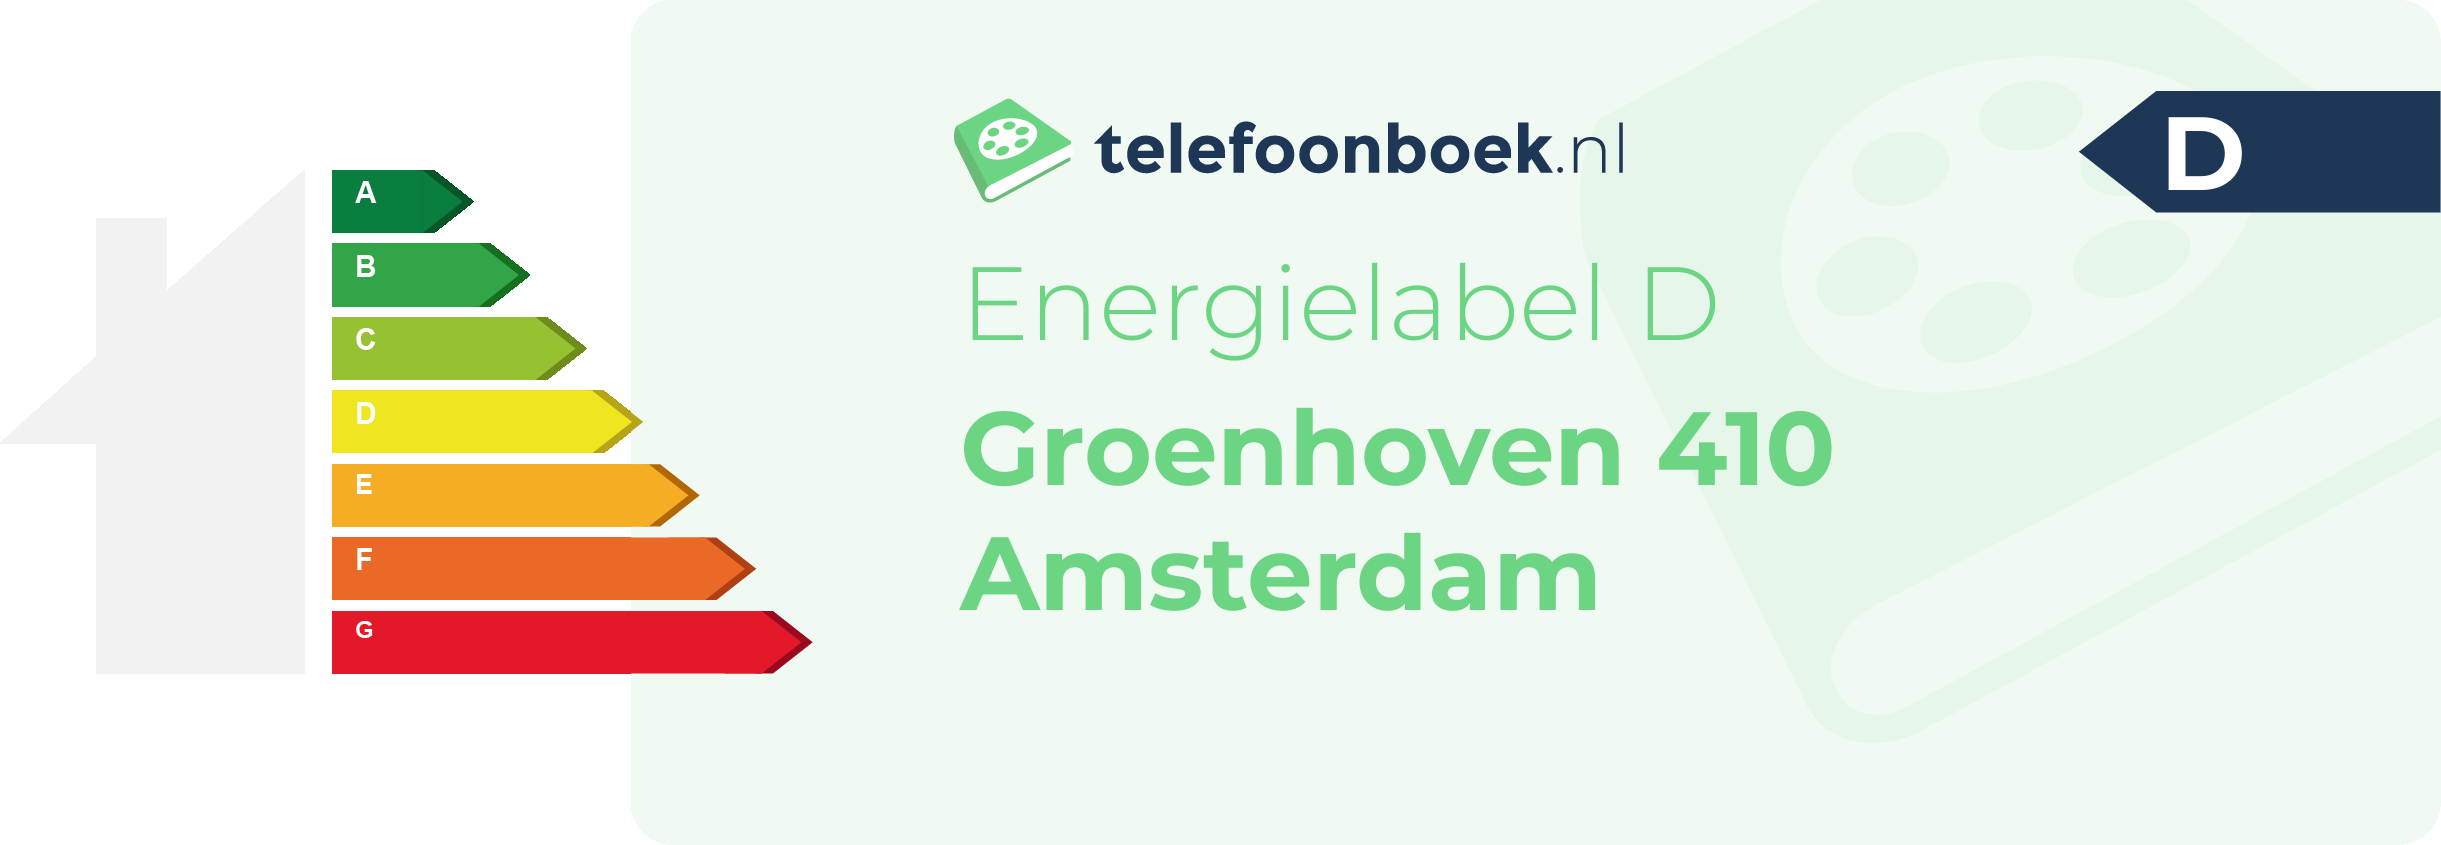 Energielabel Groenhoven 410 Amsterdam